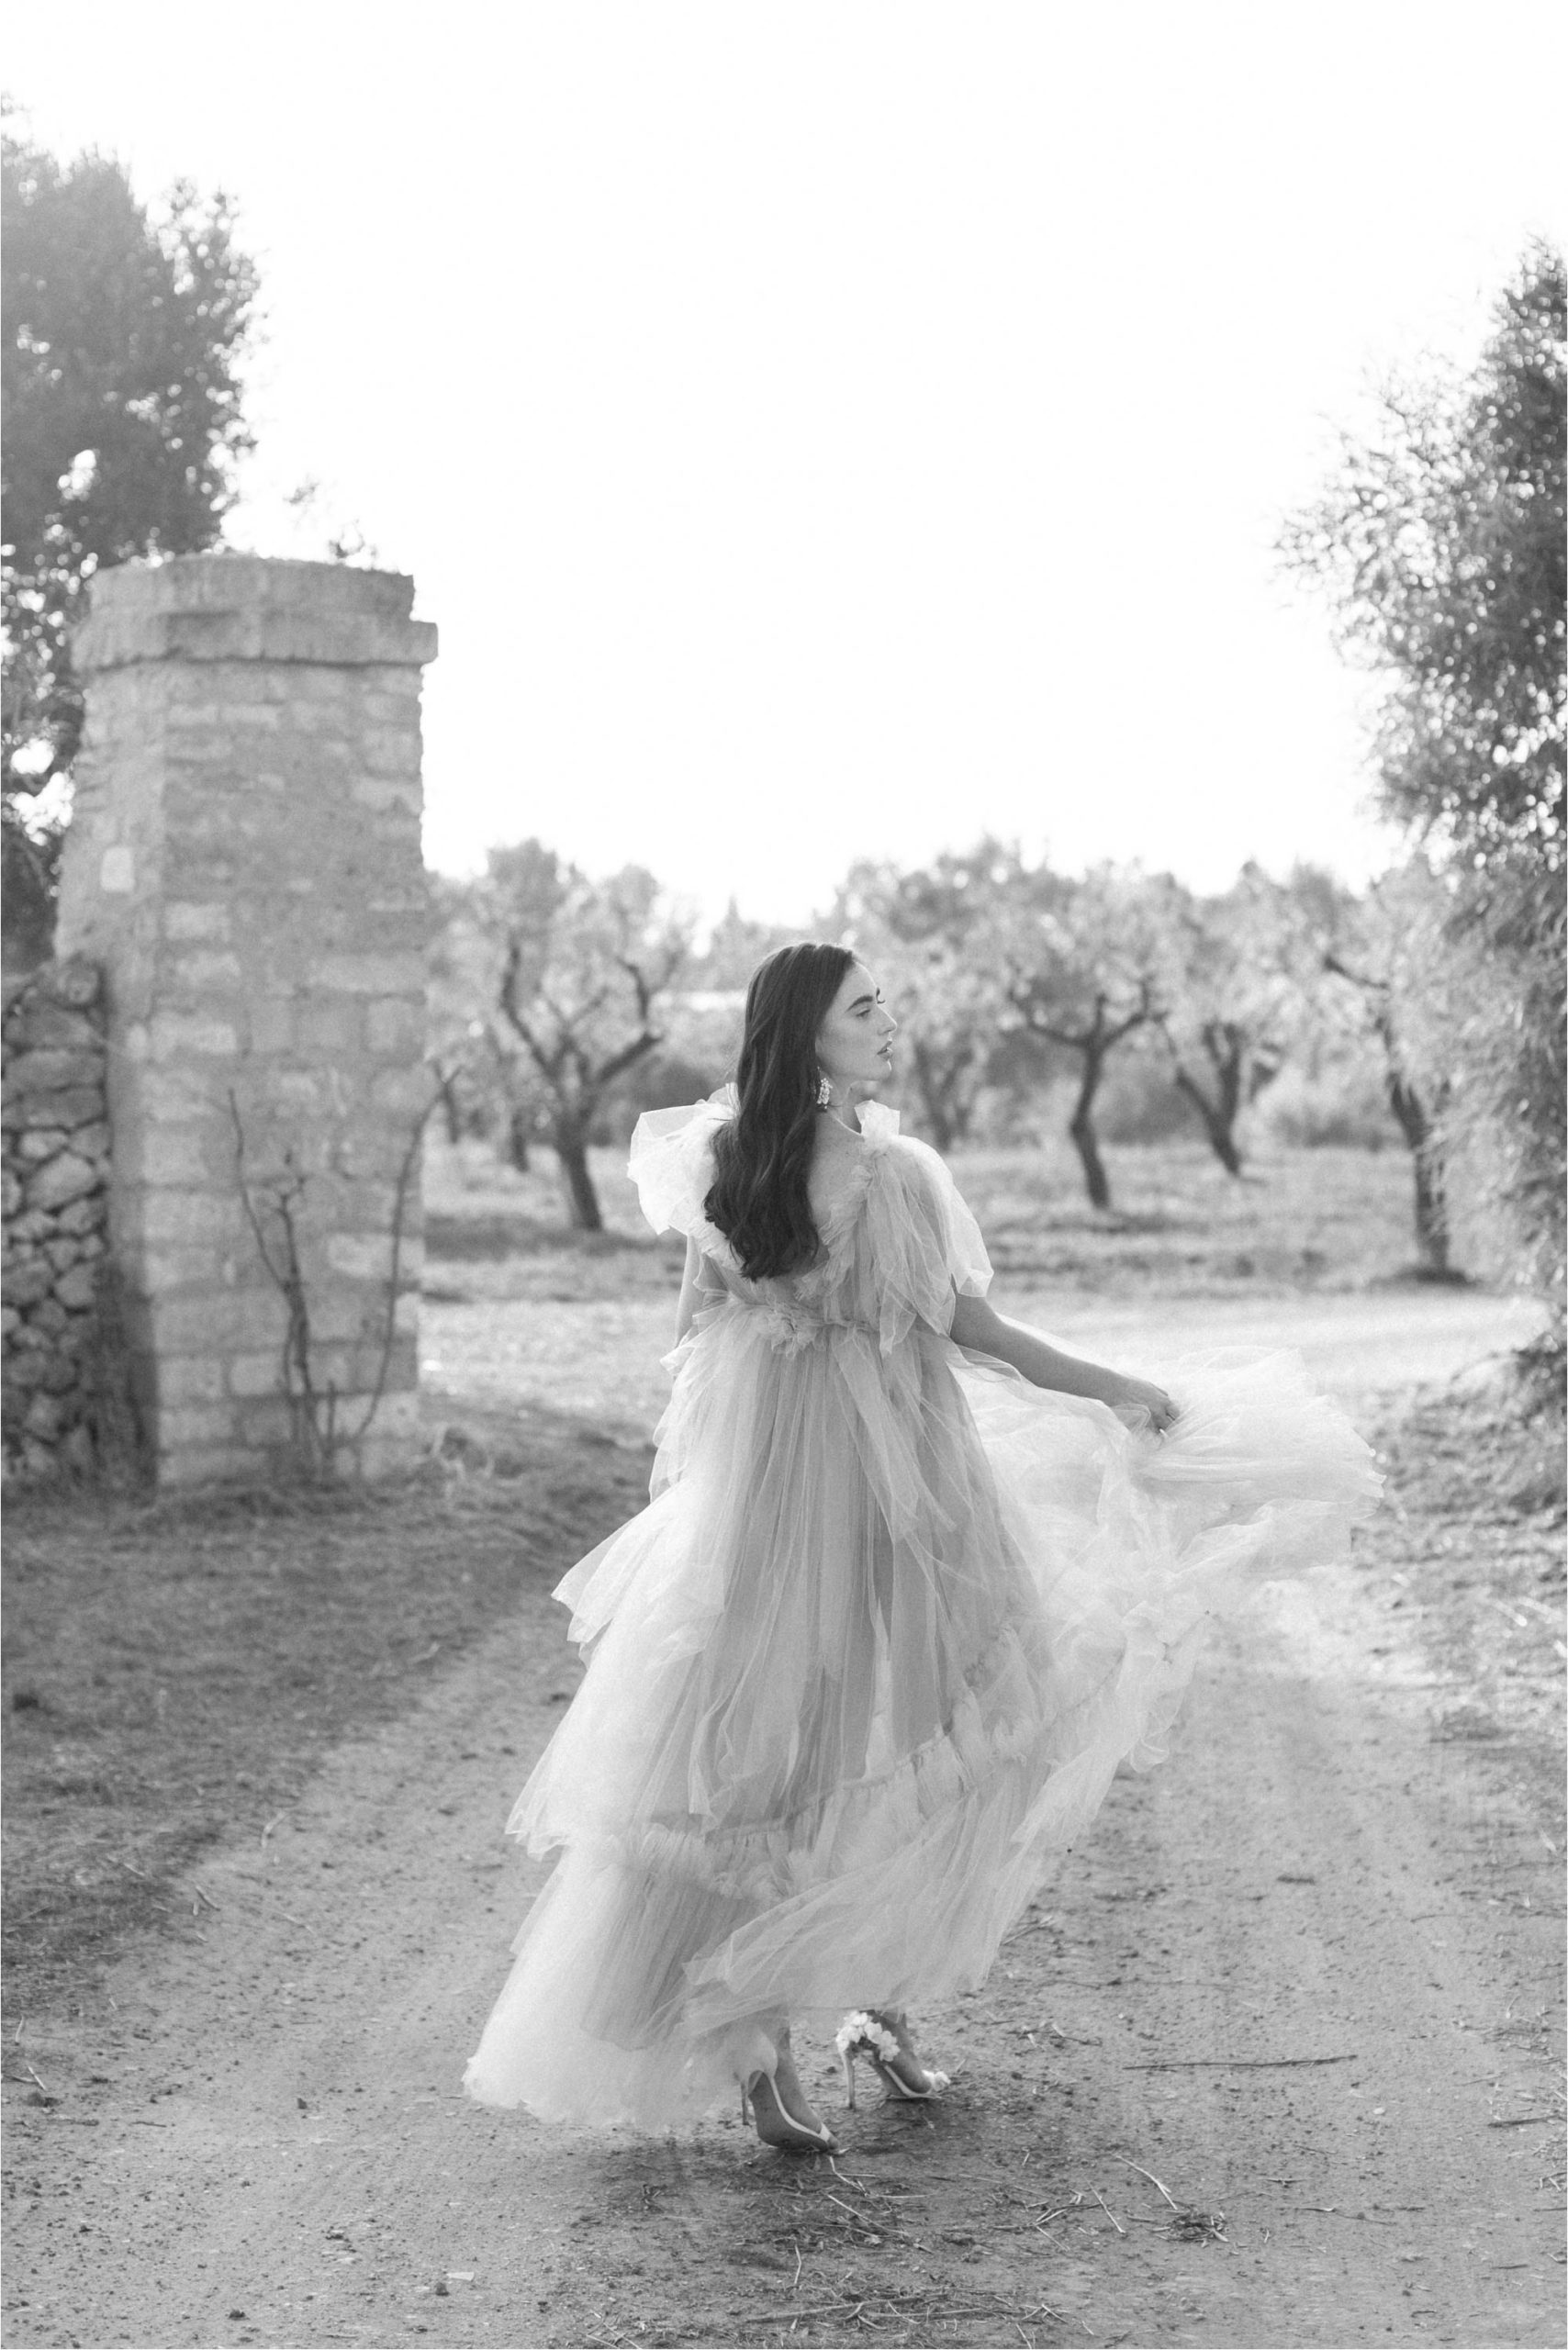 Editorial wedding photography in Puglia